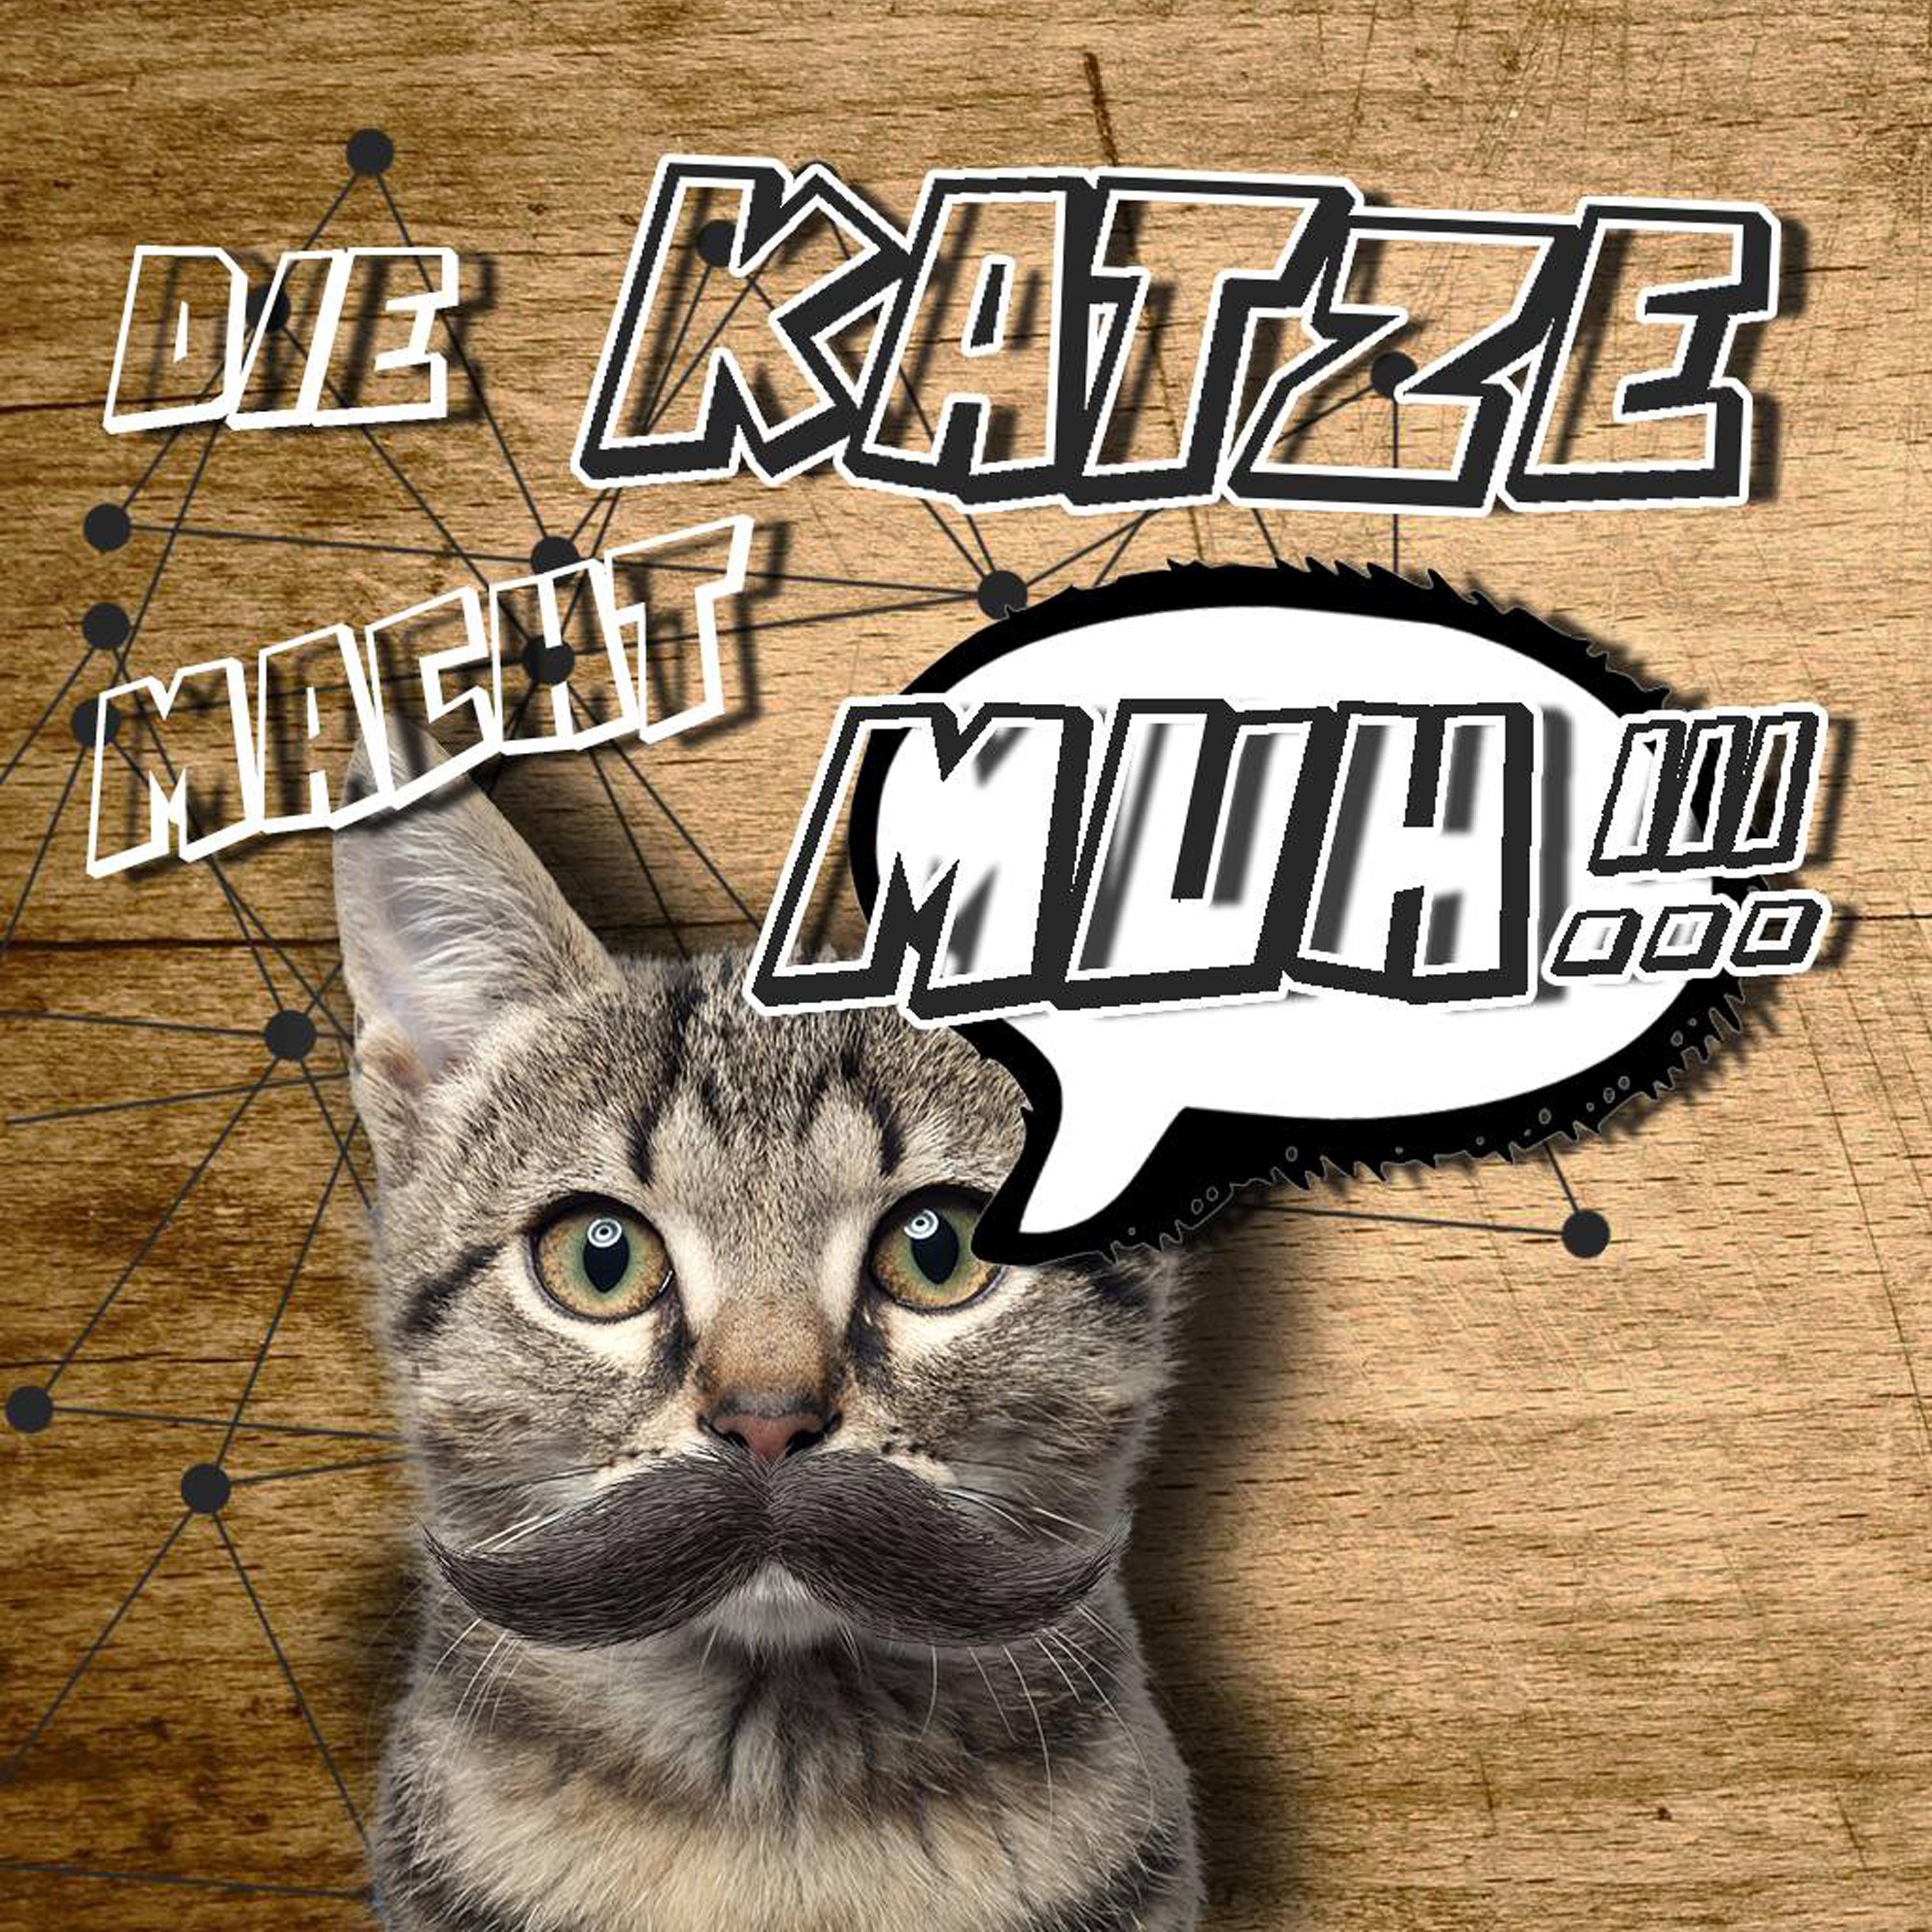 Die Katze macht Muh (Mixed by Daniel Poddi) [Continuous DJ Mix]